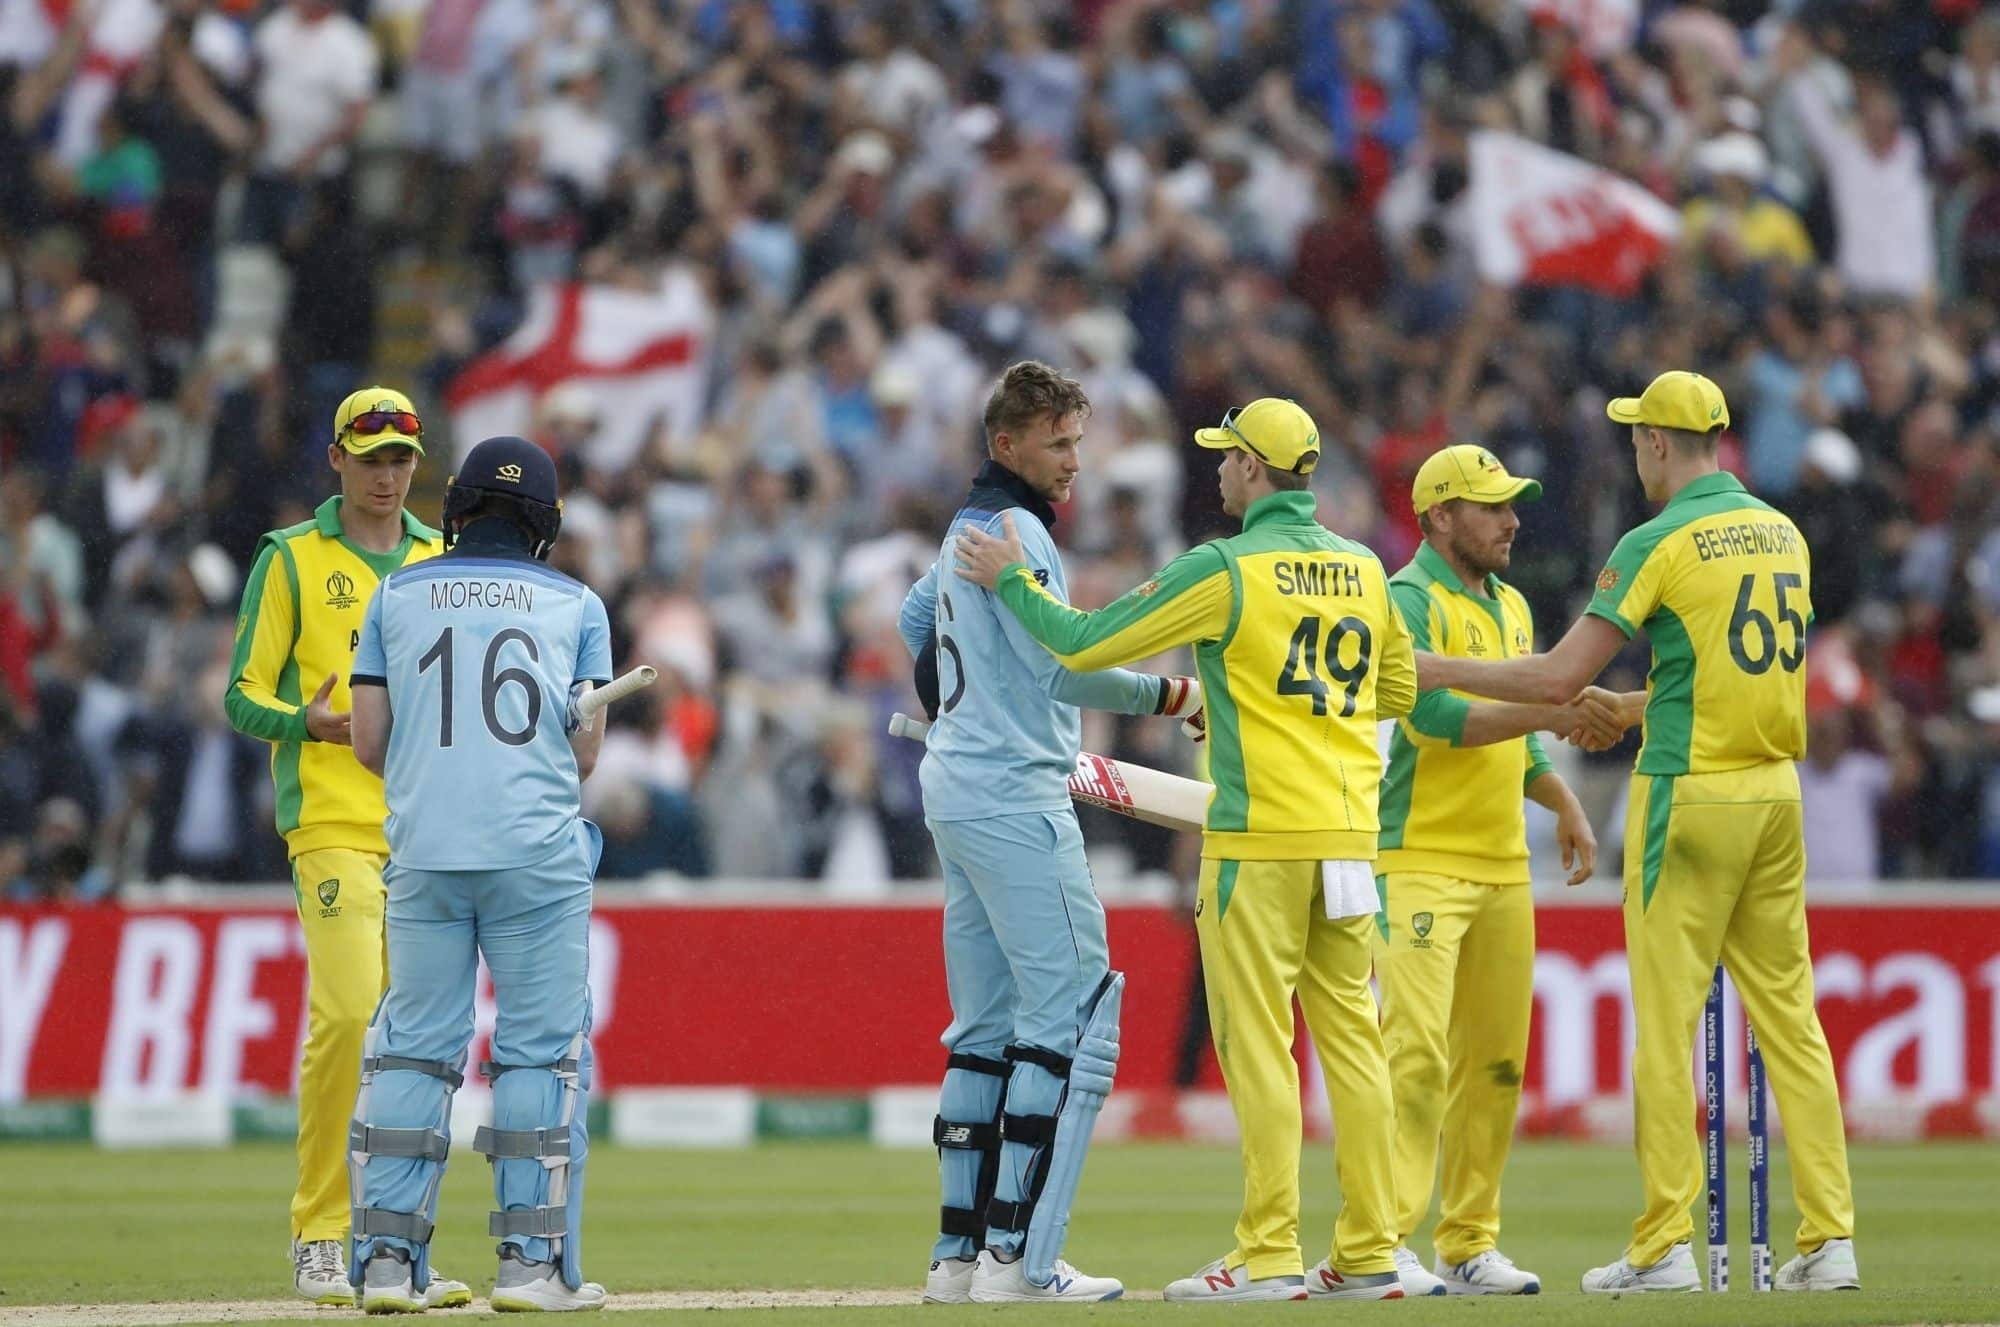 England-Australia series postponed till September: report